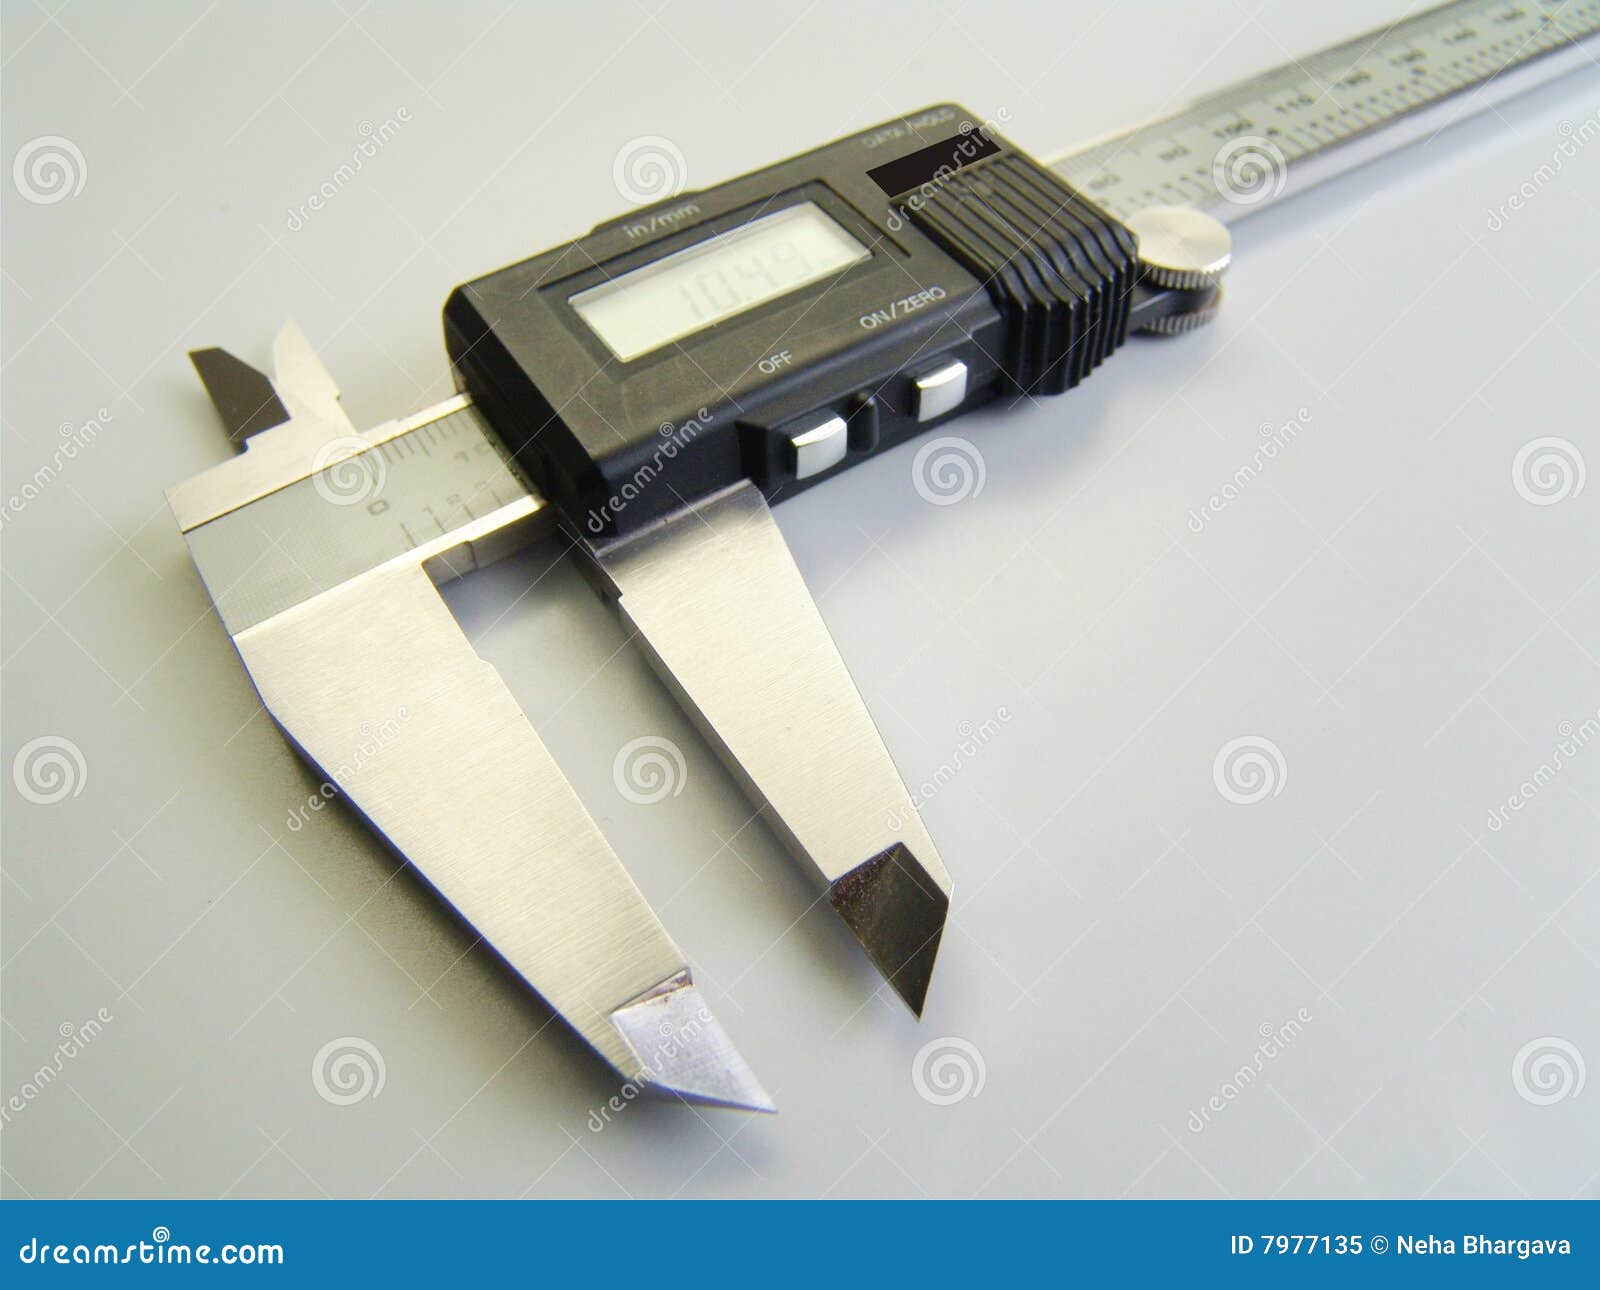 vernier measuring tool